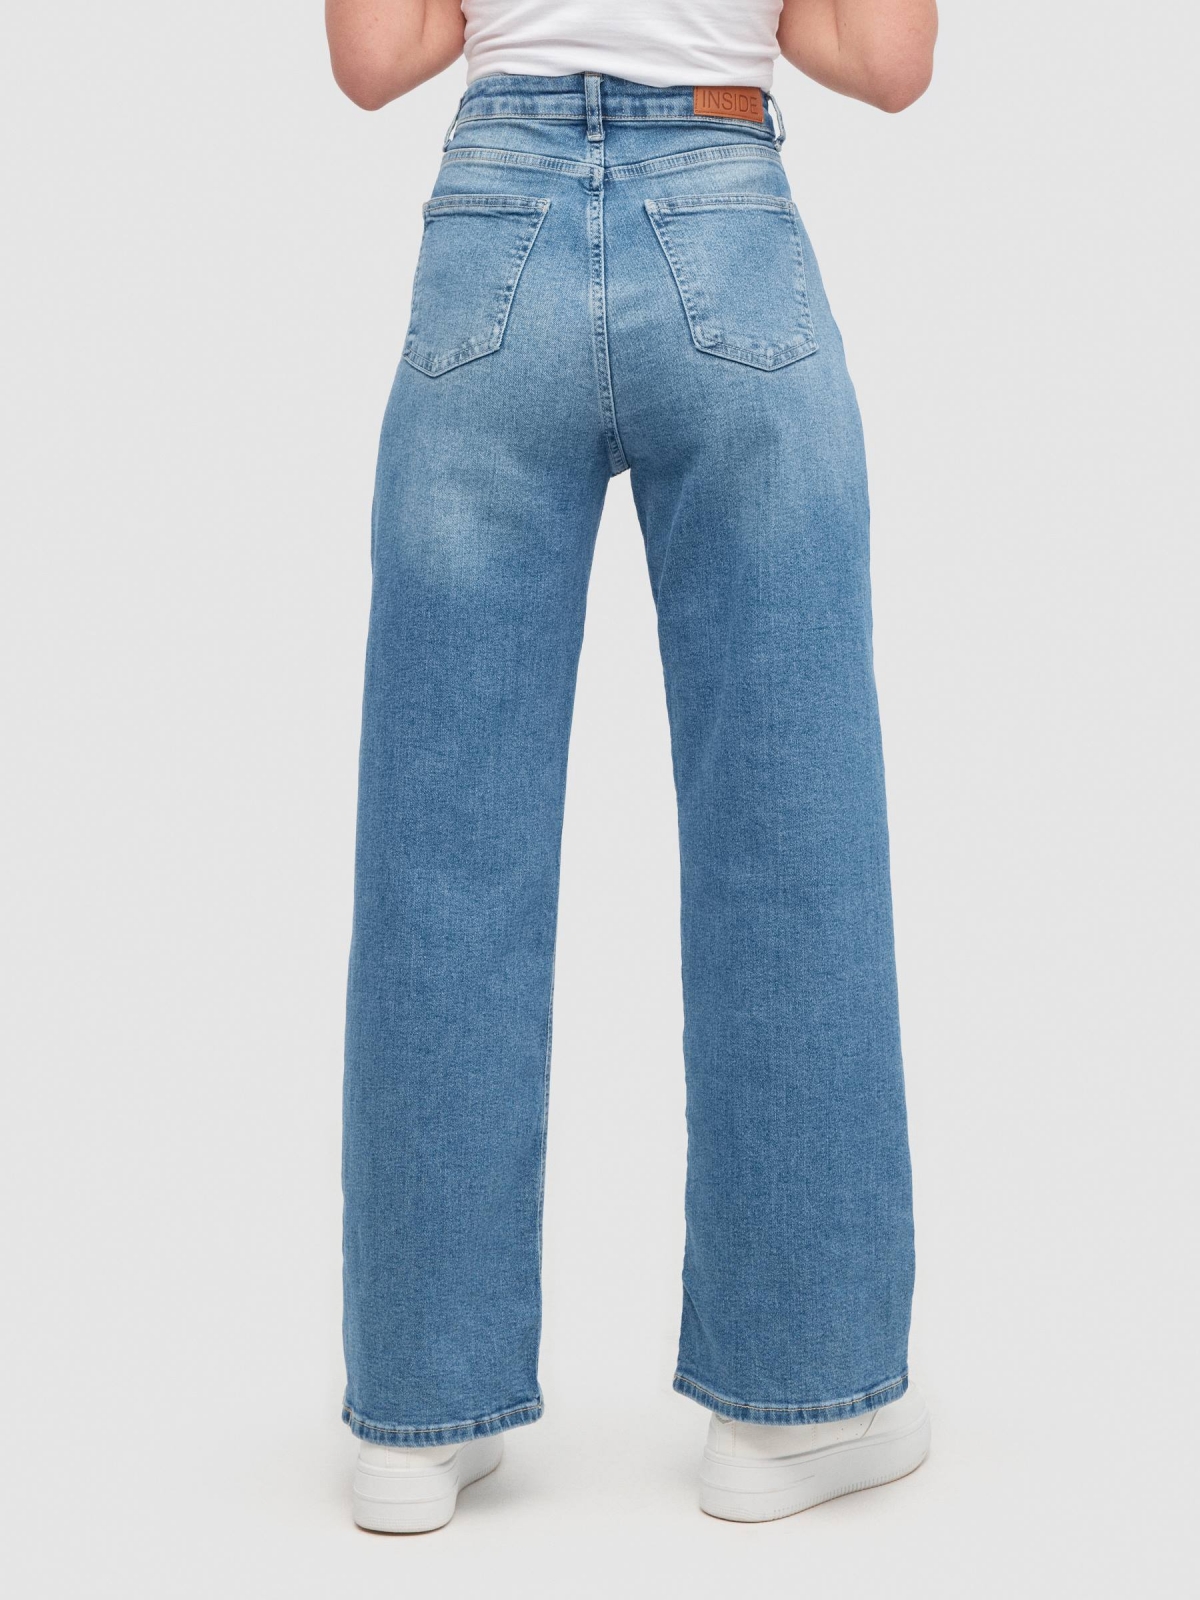 Jeans wide leg pinza azul claro vista media trasera